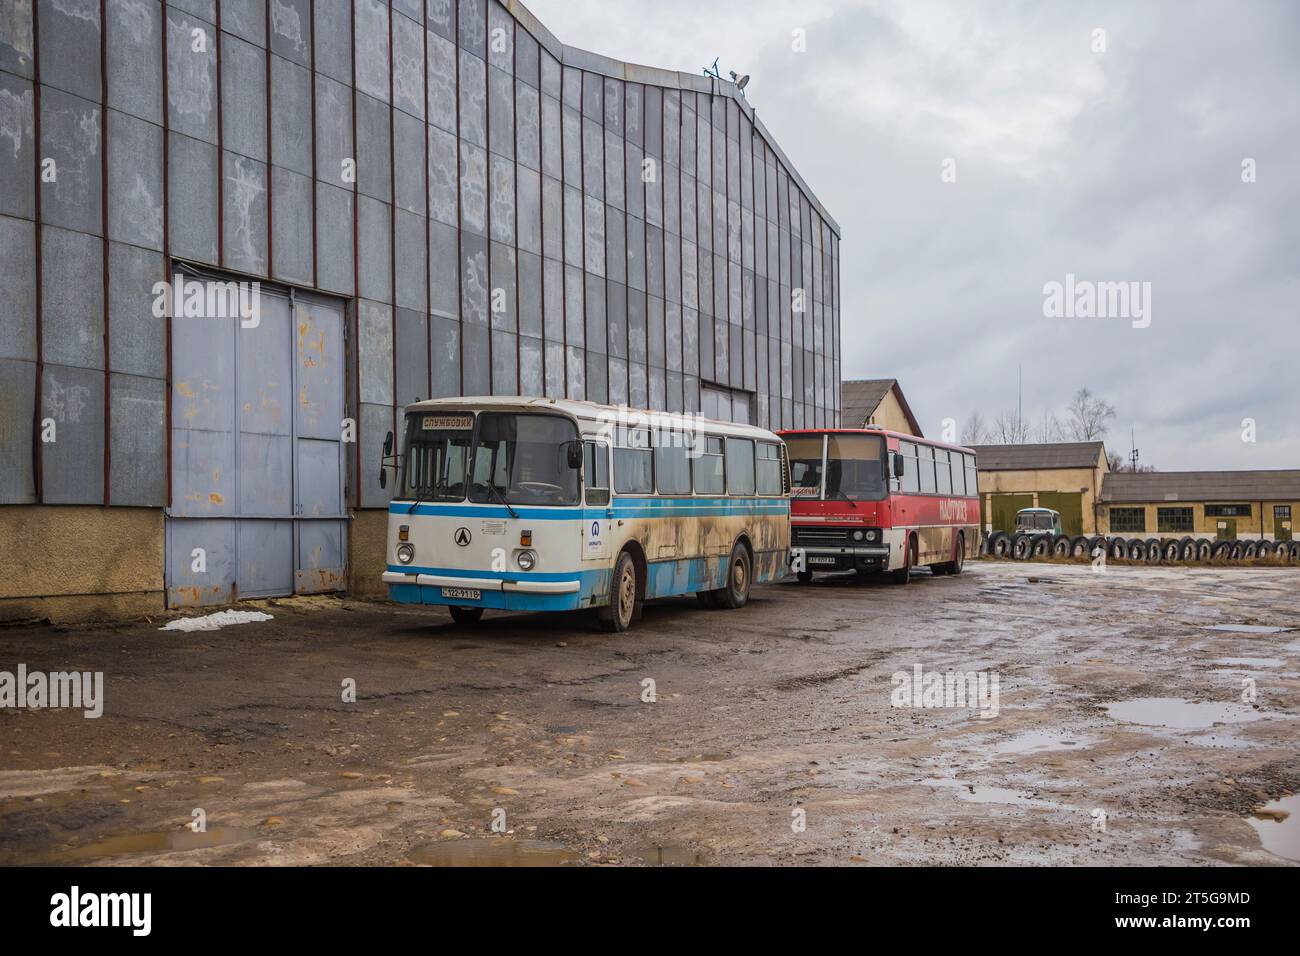 11.02.2020. Ukraine, Dolynska. Bus depot containing service buses. Stock Photo